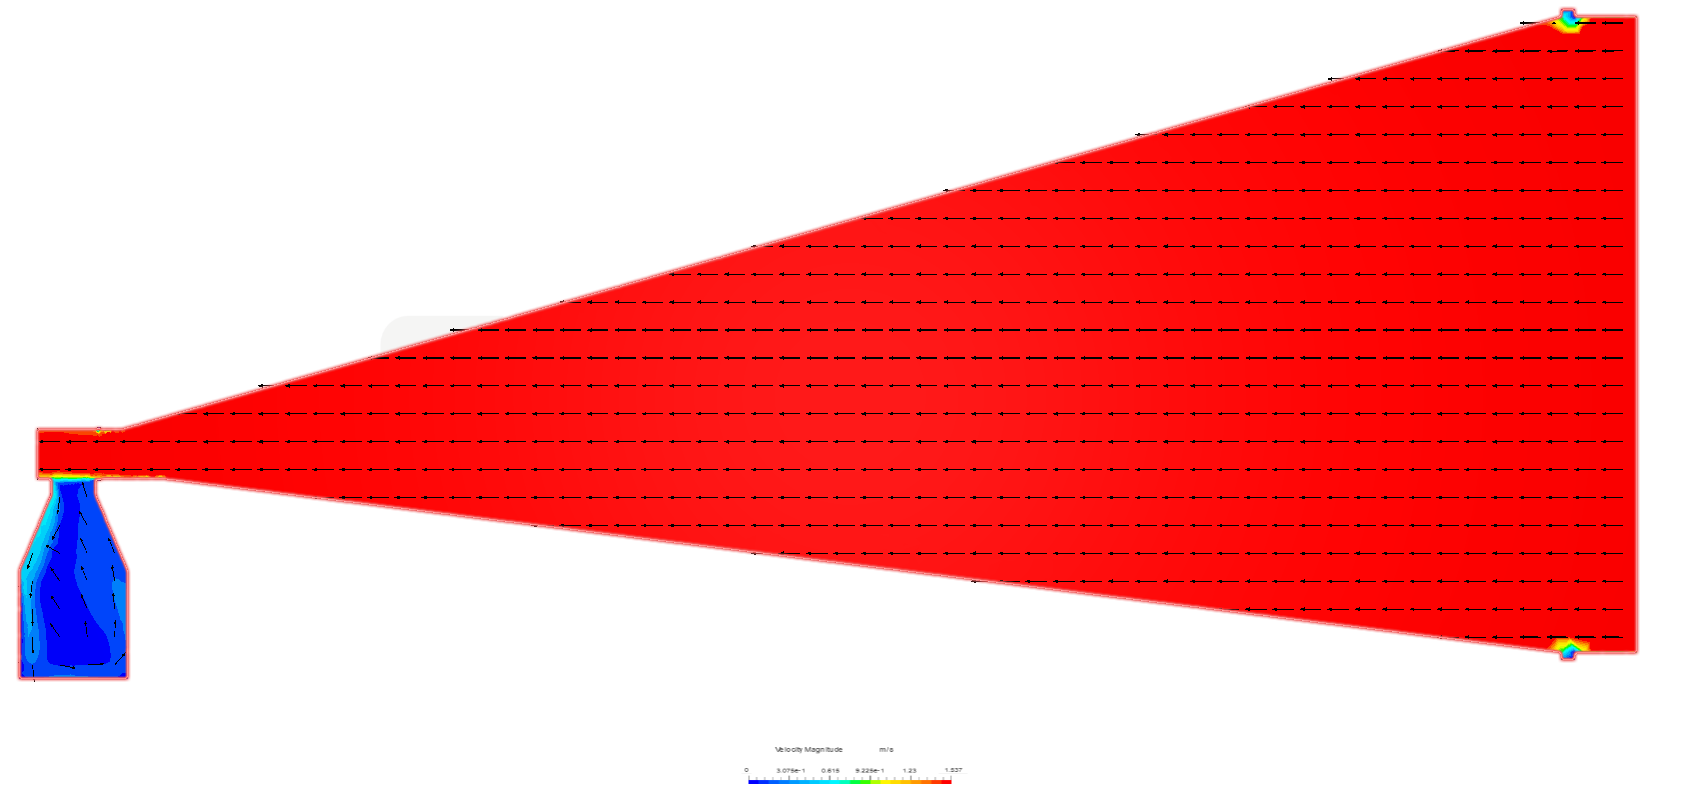 Incompressible fluid flow simulation in a wind drift sampler image